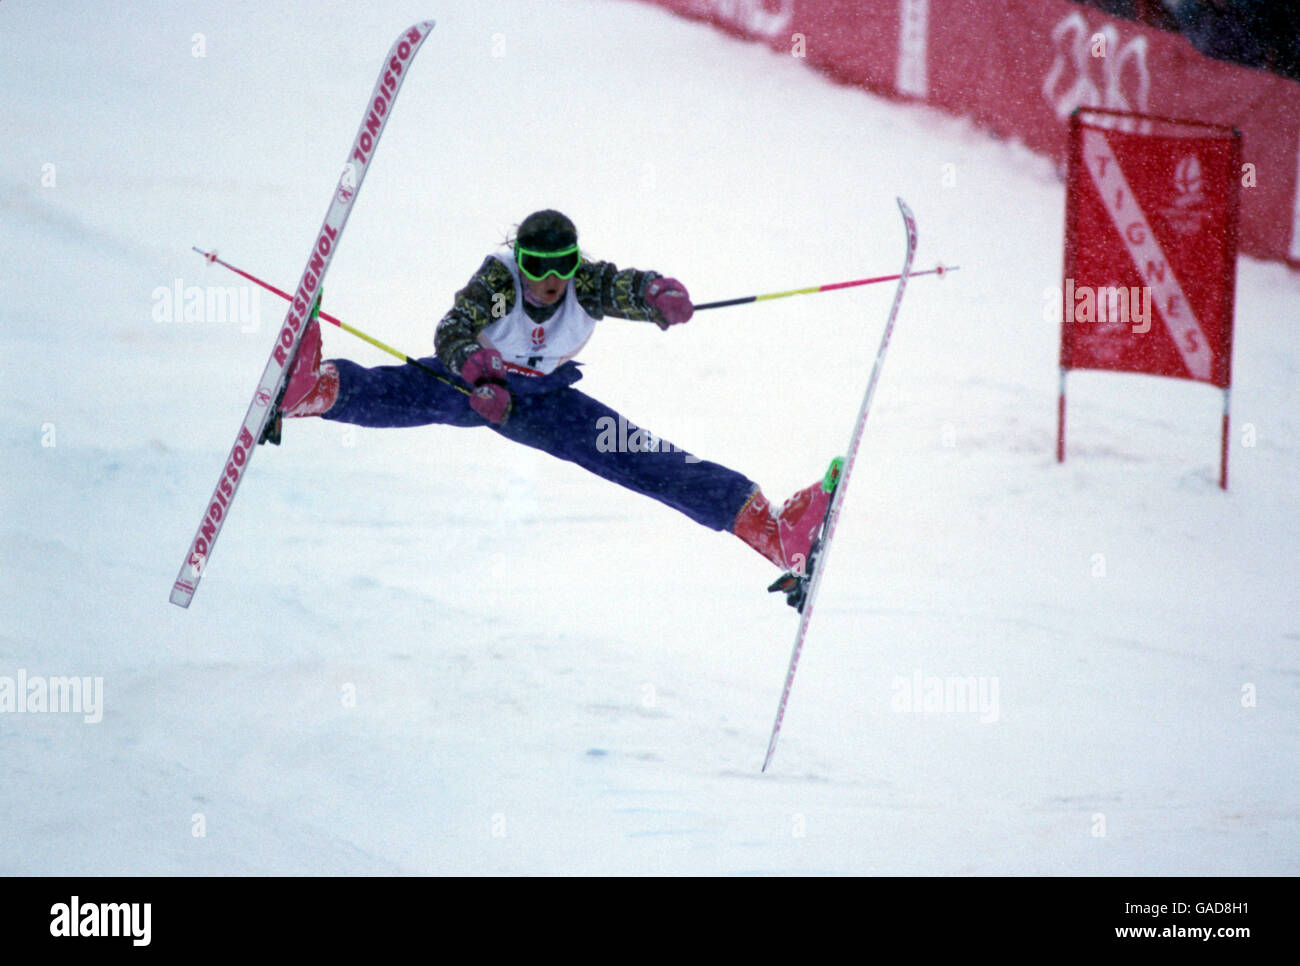 Winter Olympic Games 1992 - Albertville. Elizaveta Kojevnikova competes for the Unified Team. Stock Photo